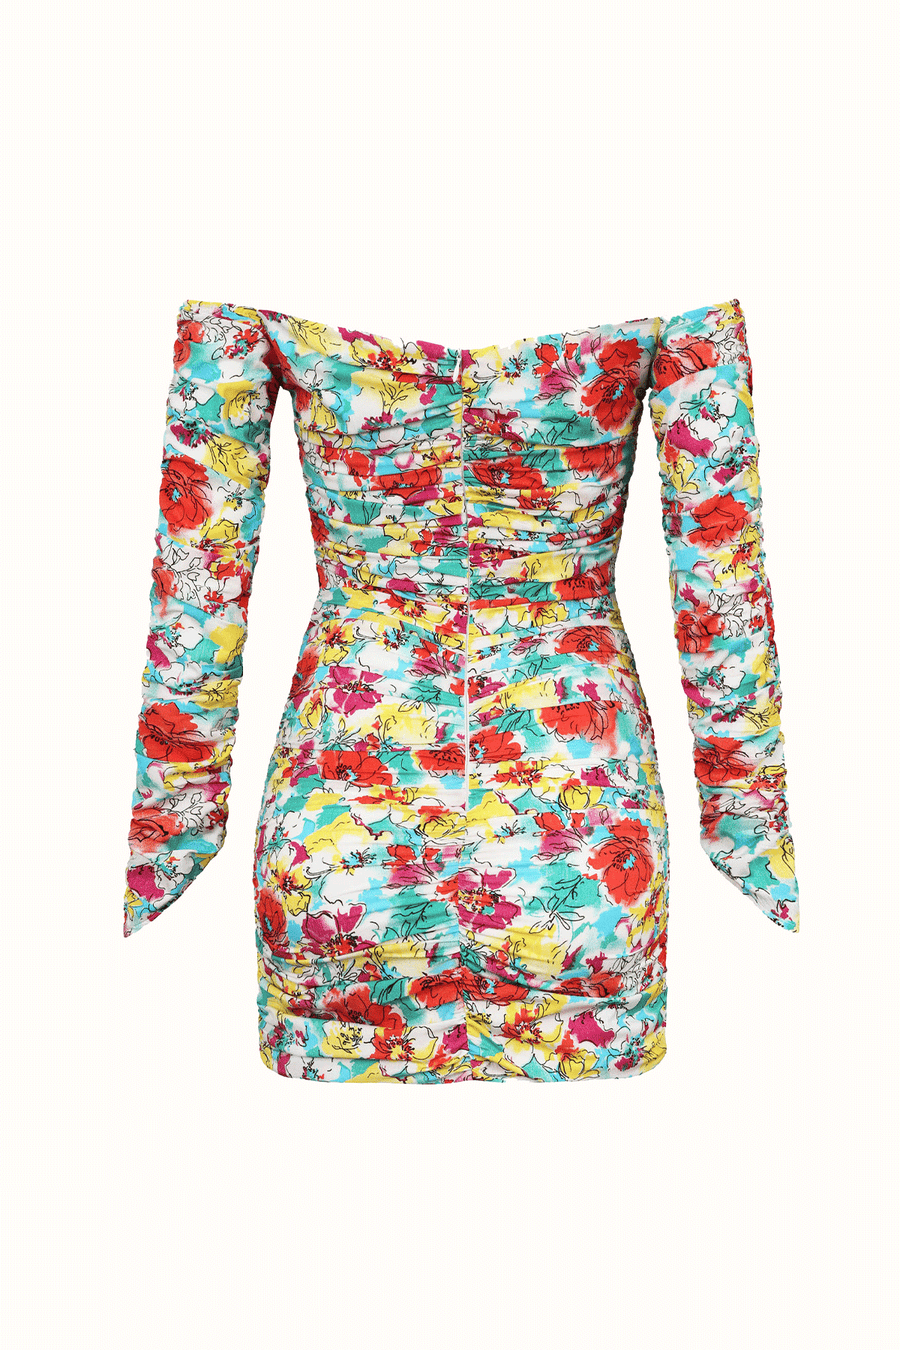 Nora Mini Elbise / Renkli Çiçekli - NAIA ISTANBUL Shop Online